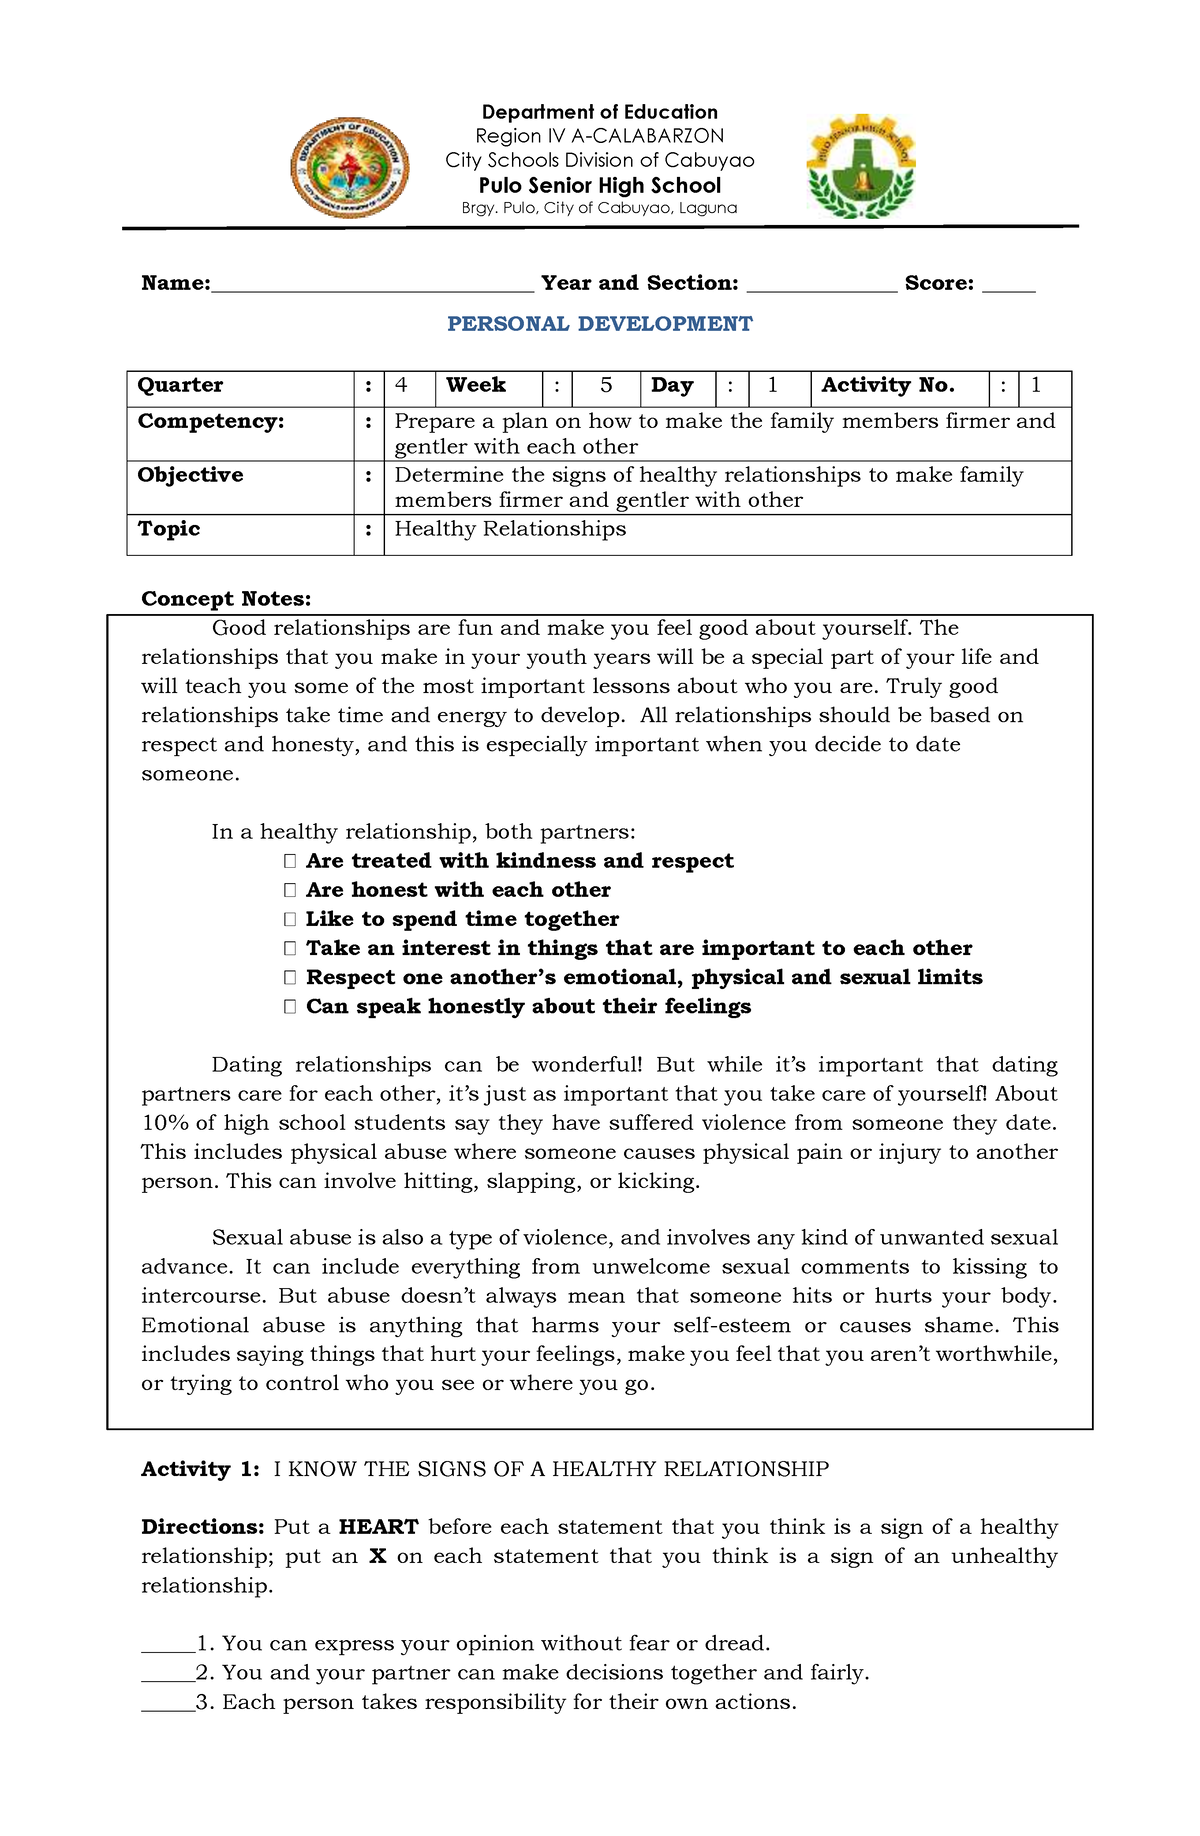 SHS Perdev Q4 Wk5 Worksheet MS Maquinto - Department of Education ...